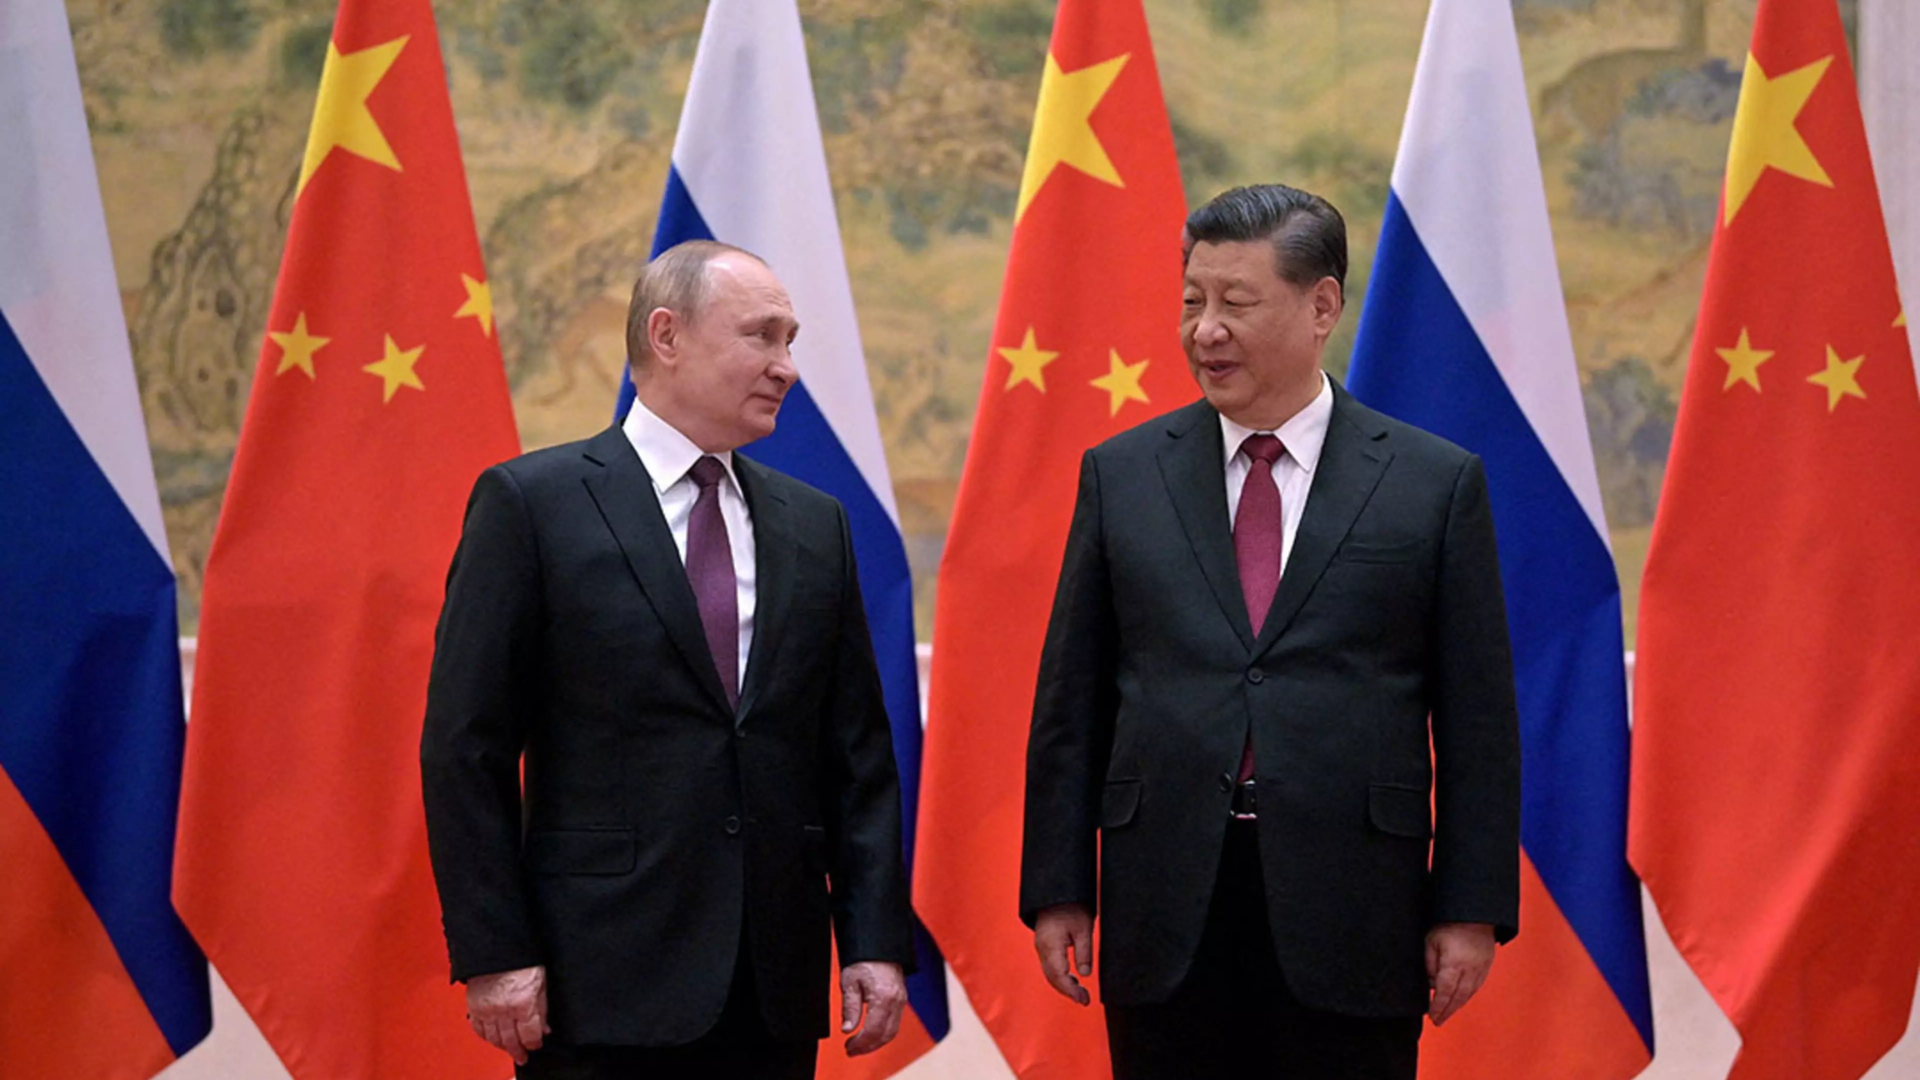 Putin Praises ‘Brotherhood’ Between Russians And Chinese During China Visit